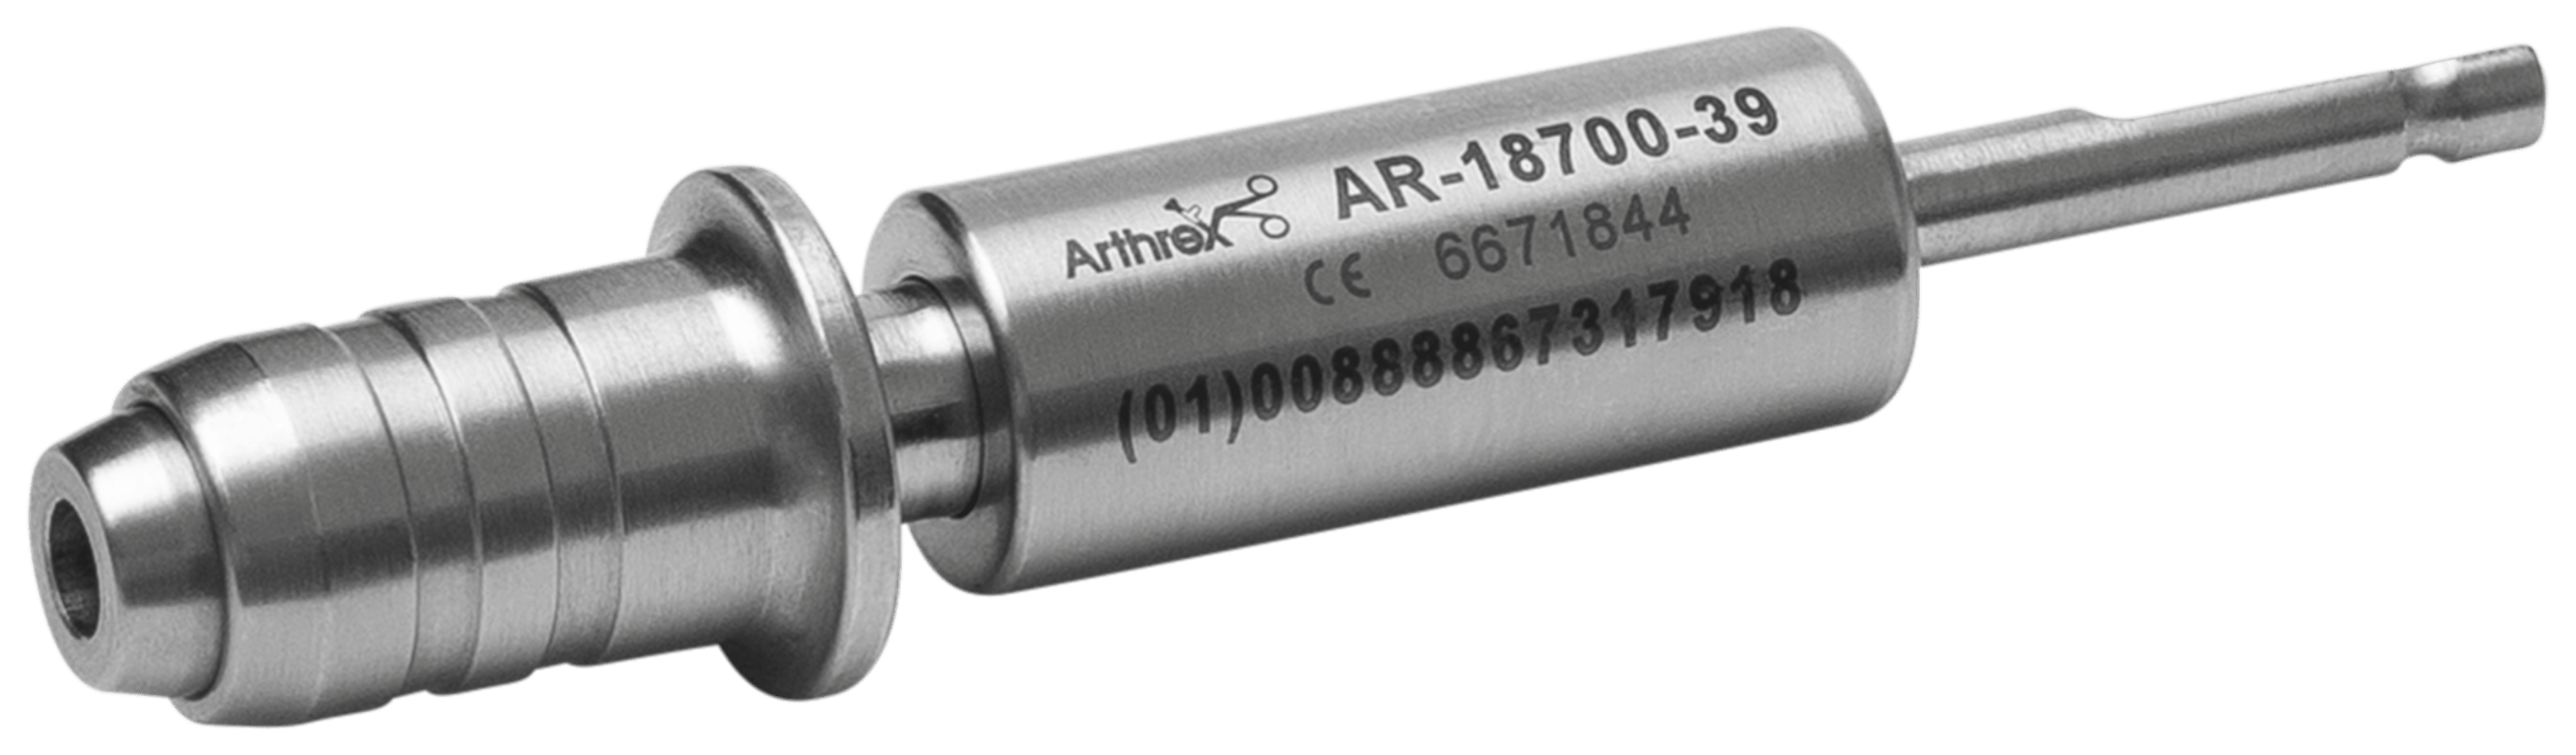 Torque Limiting Adapter, AO, 0.8 Nm